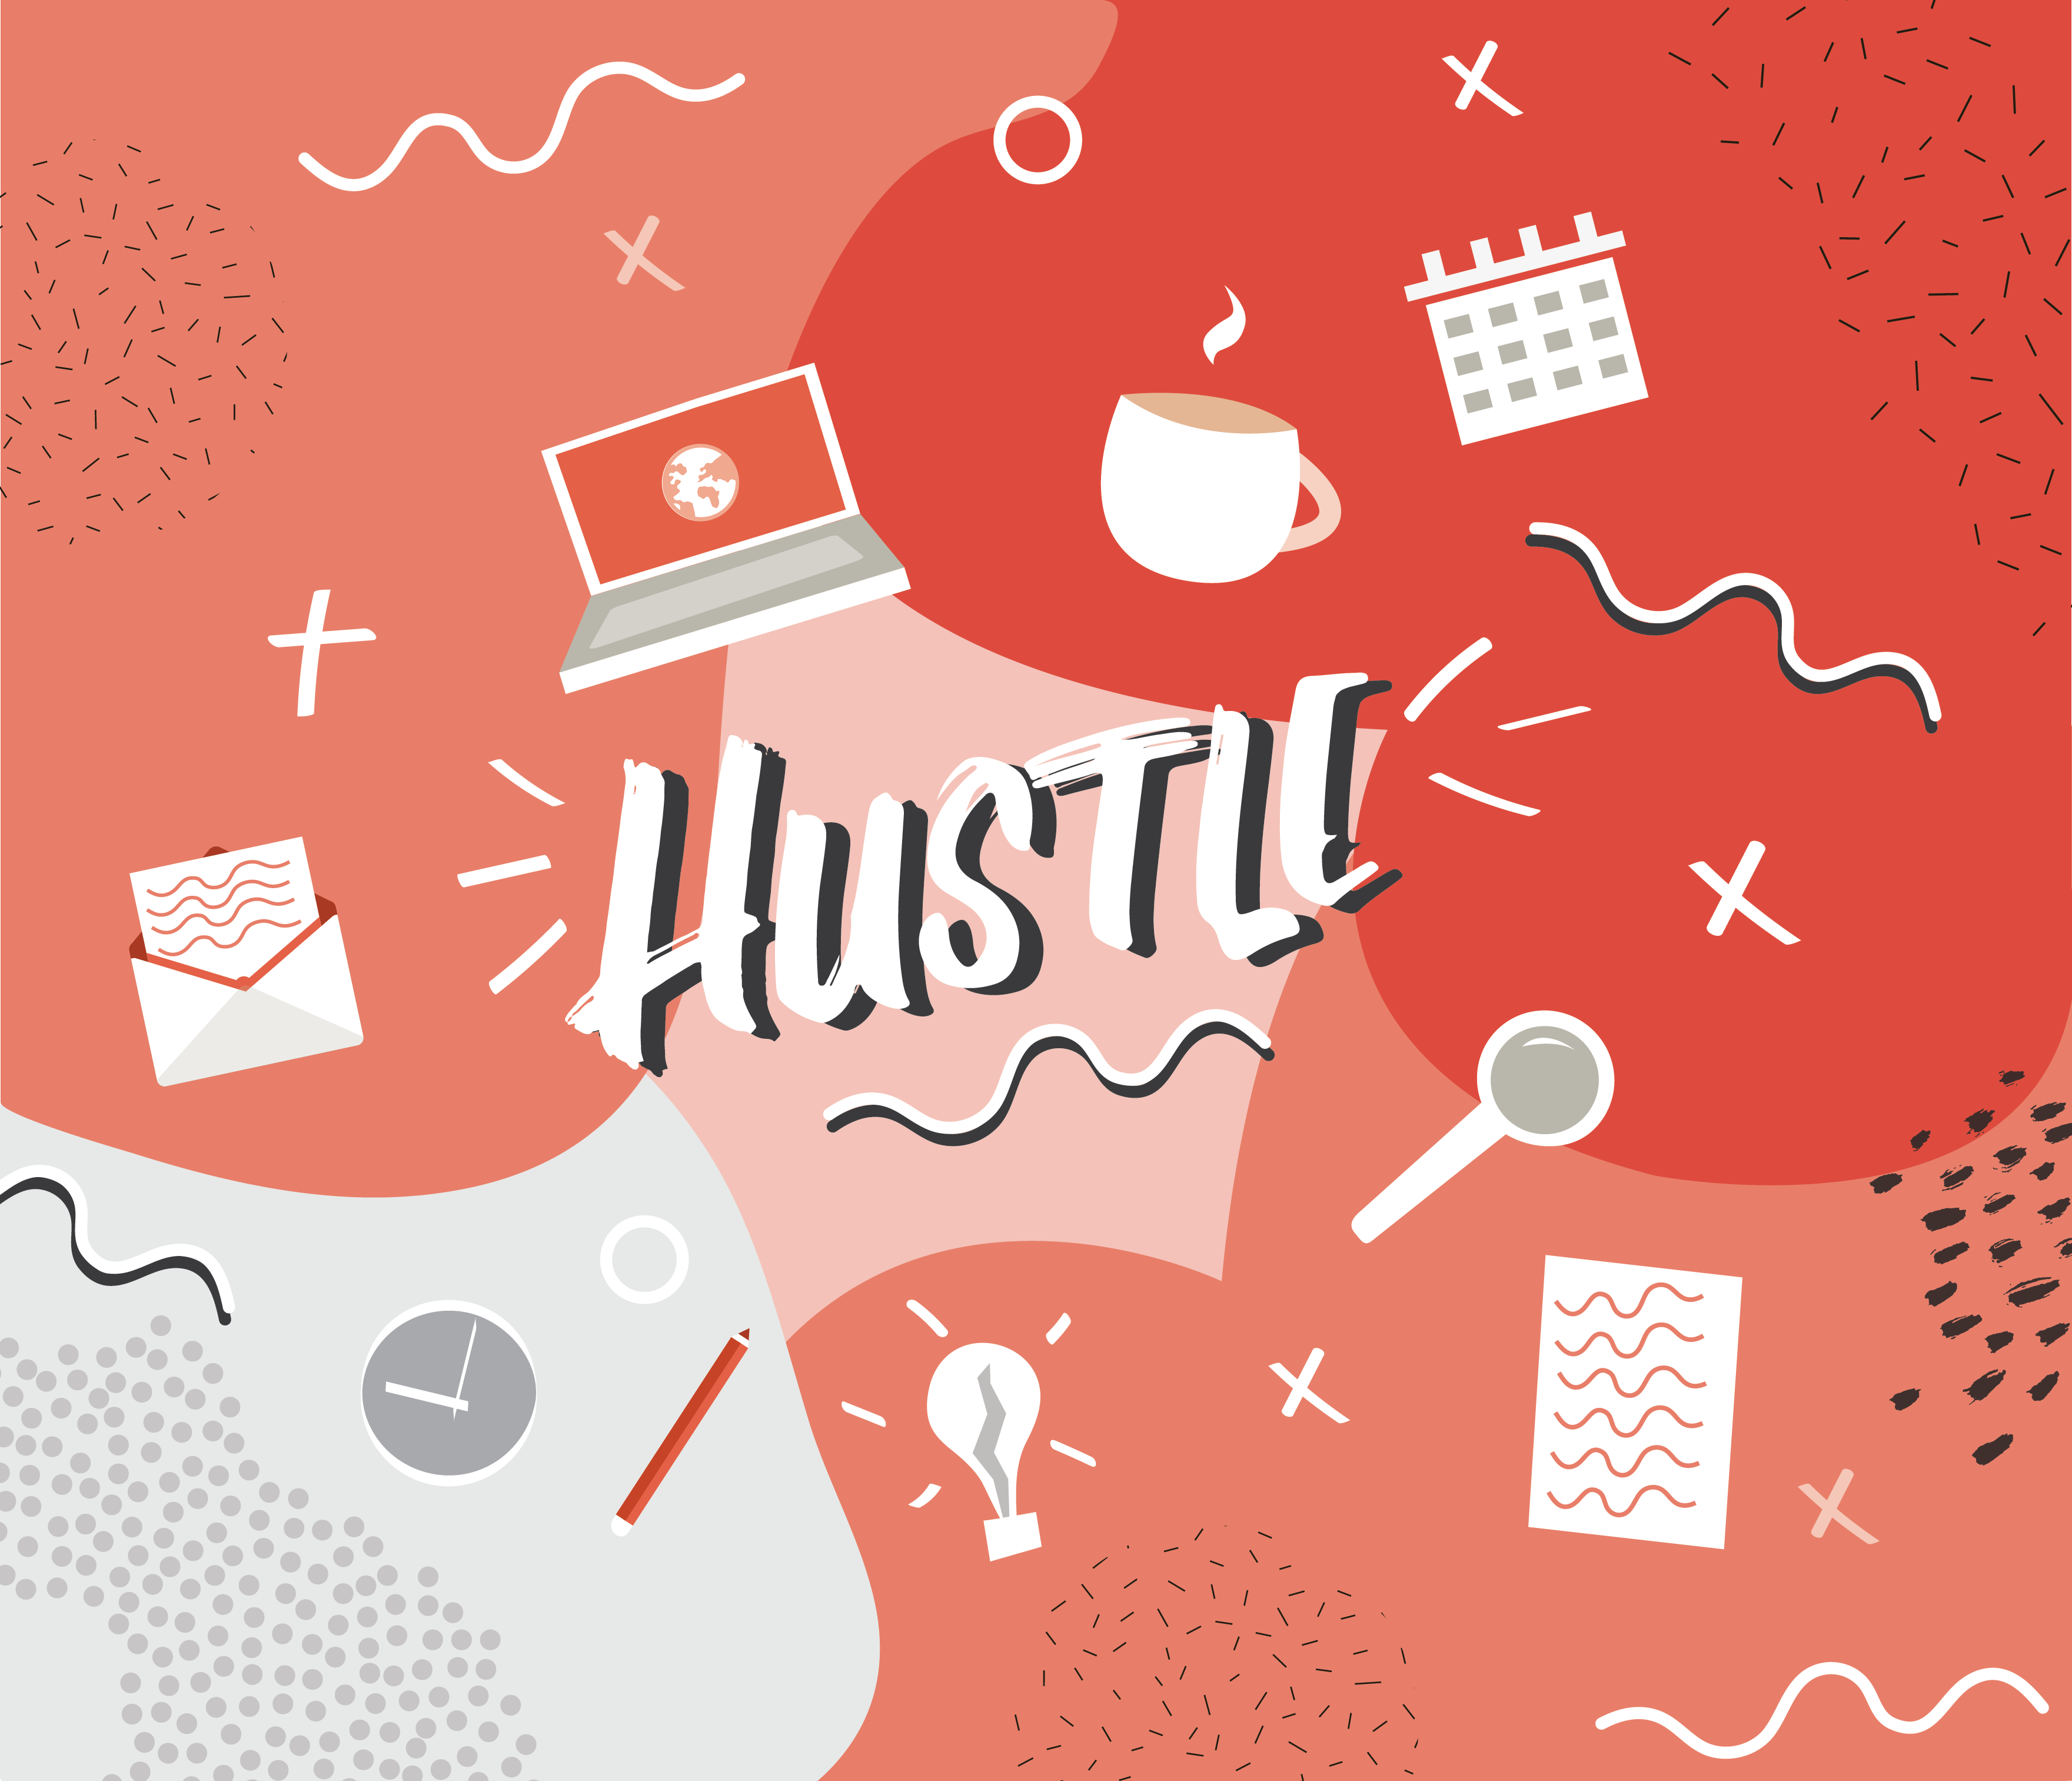 Hustle graphic